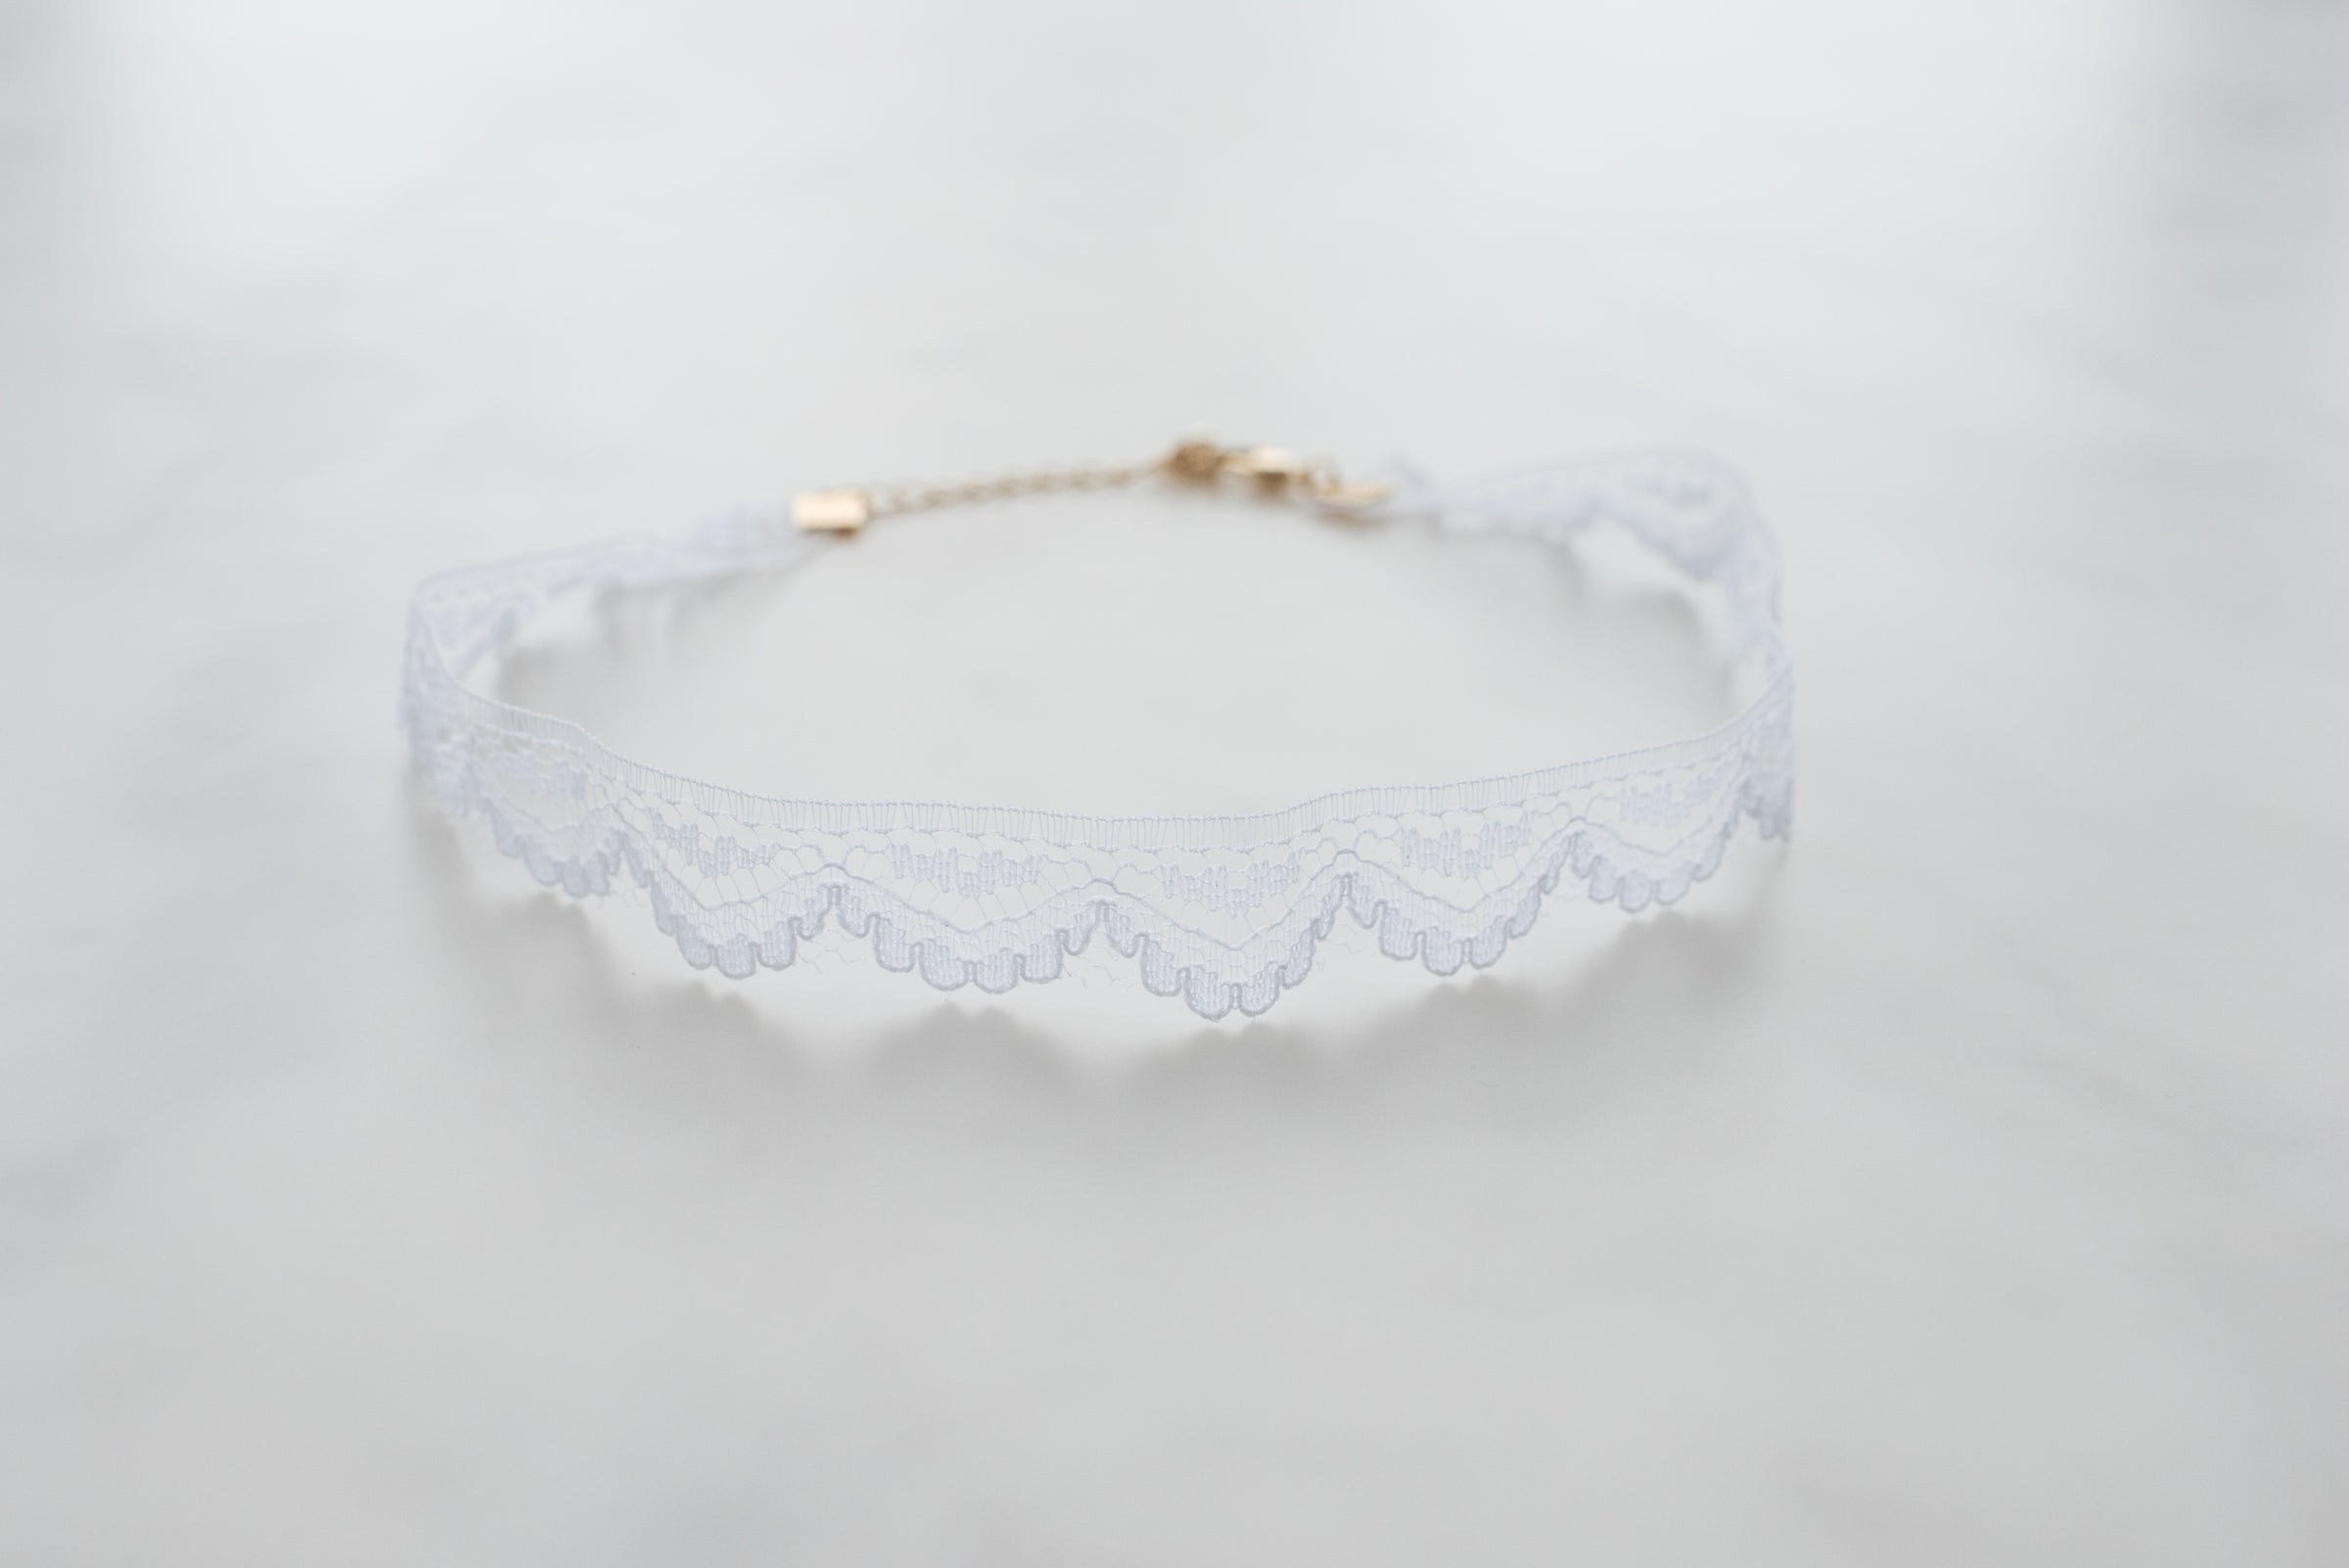 White lace chocker on display white background